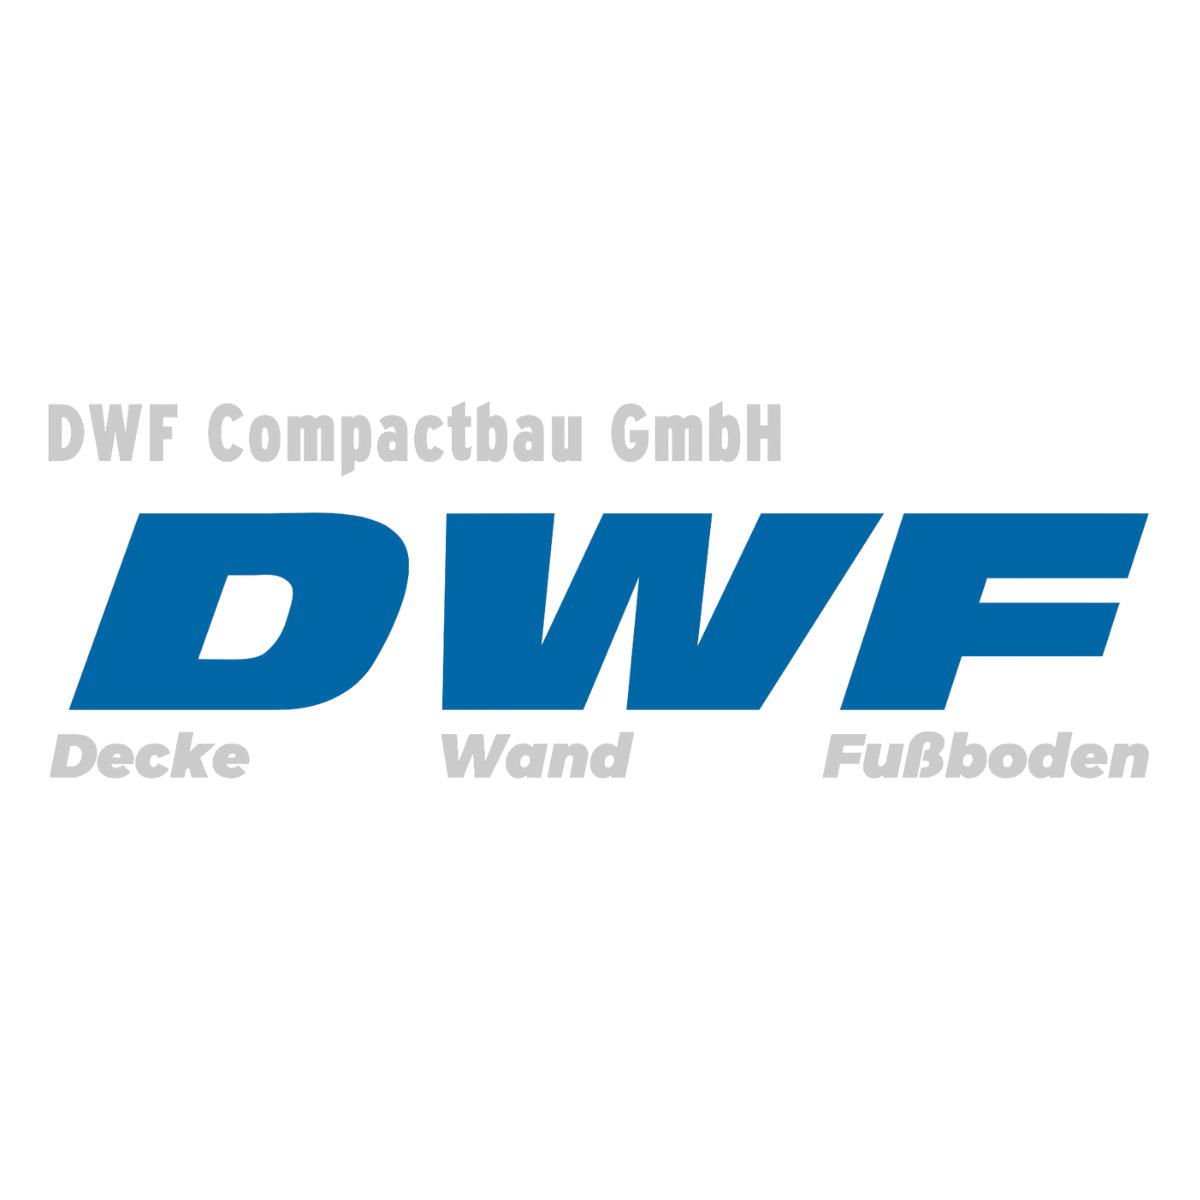 DWF Compactbau GmbH in Erfurt